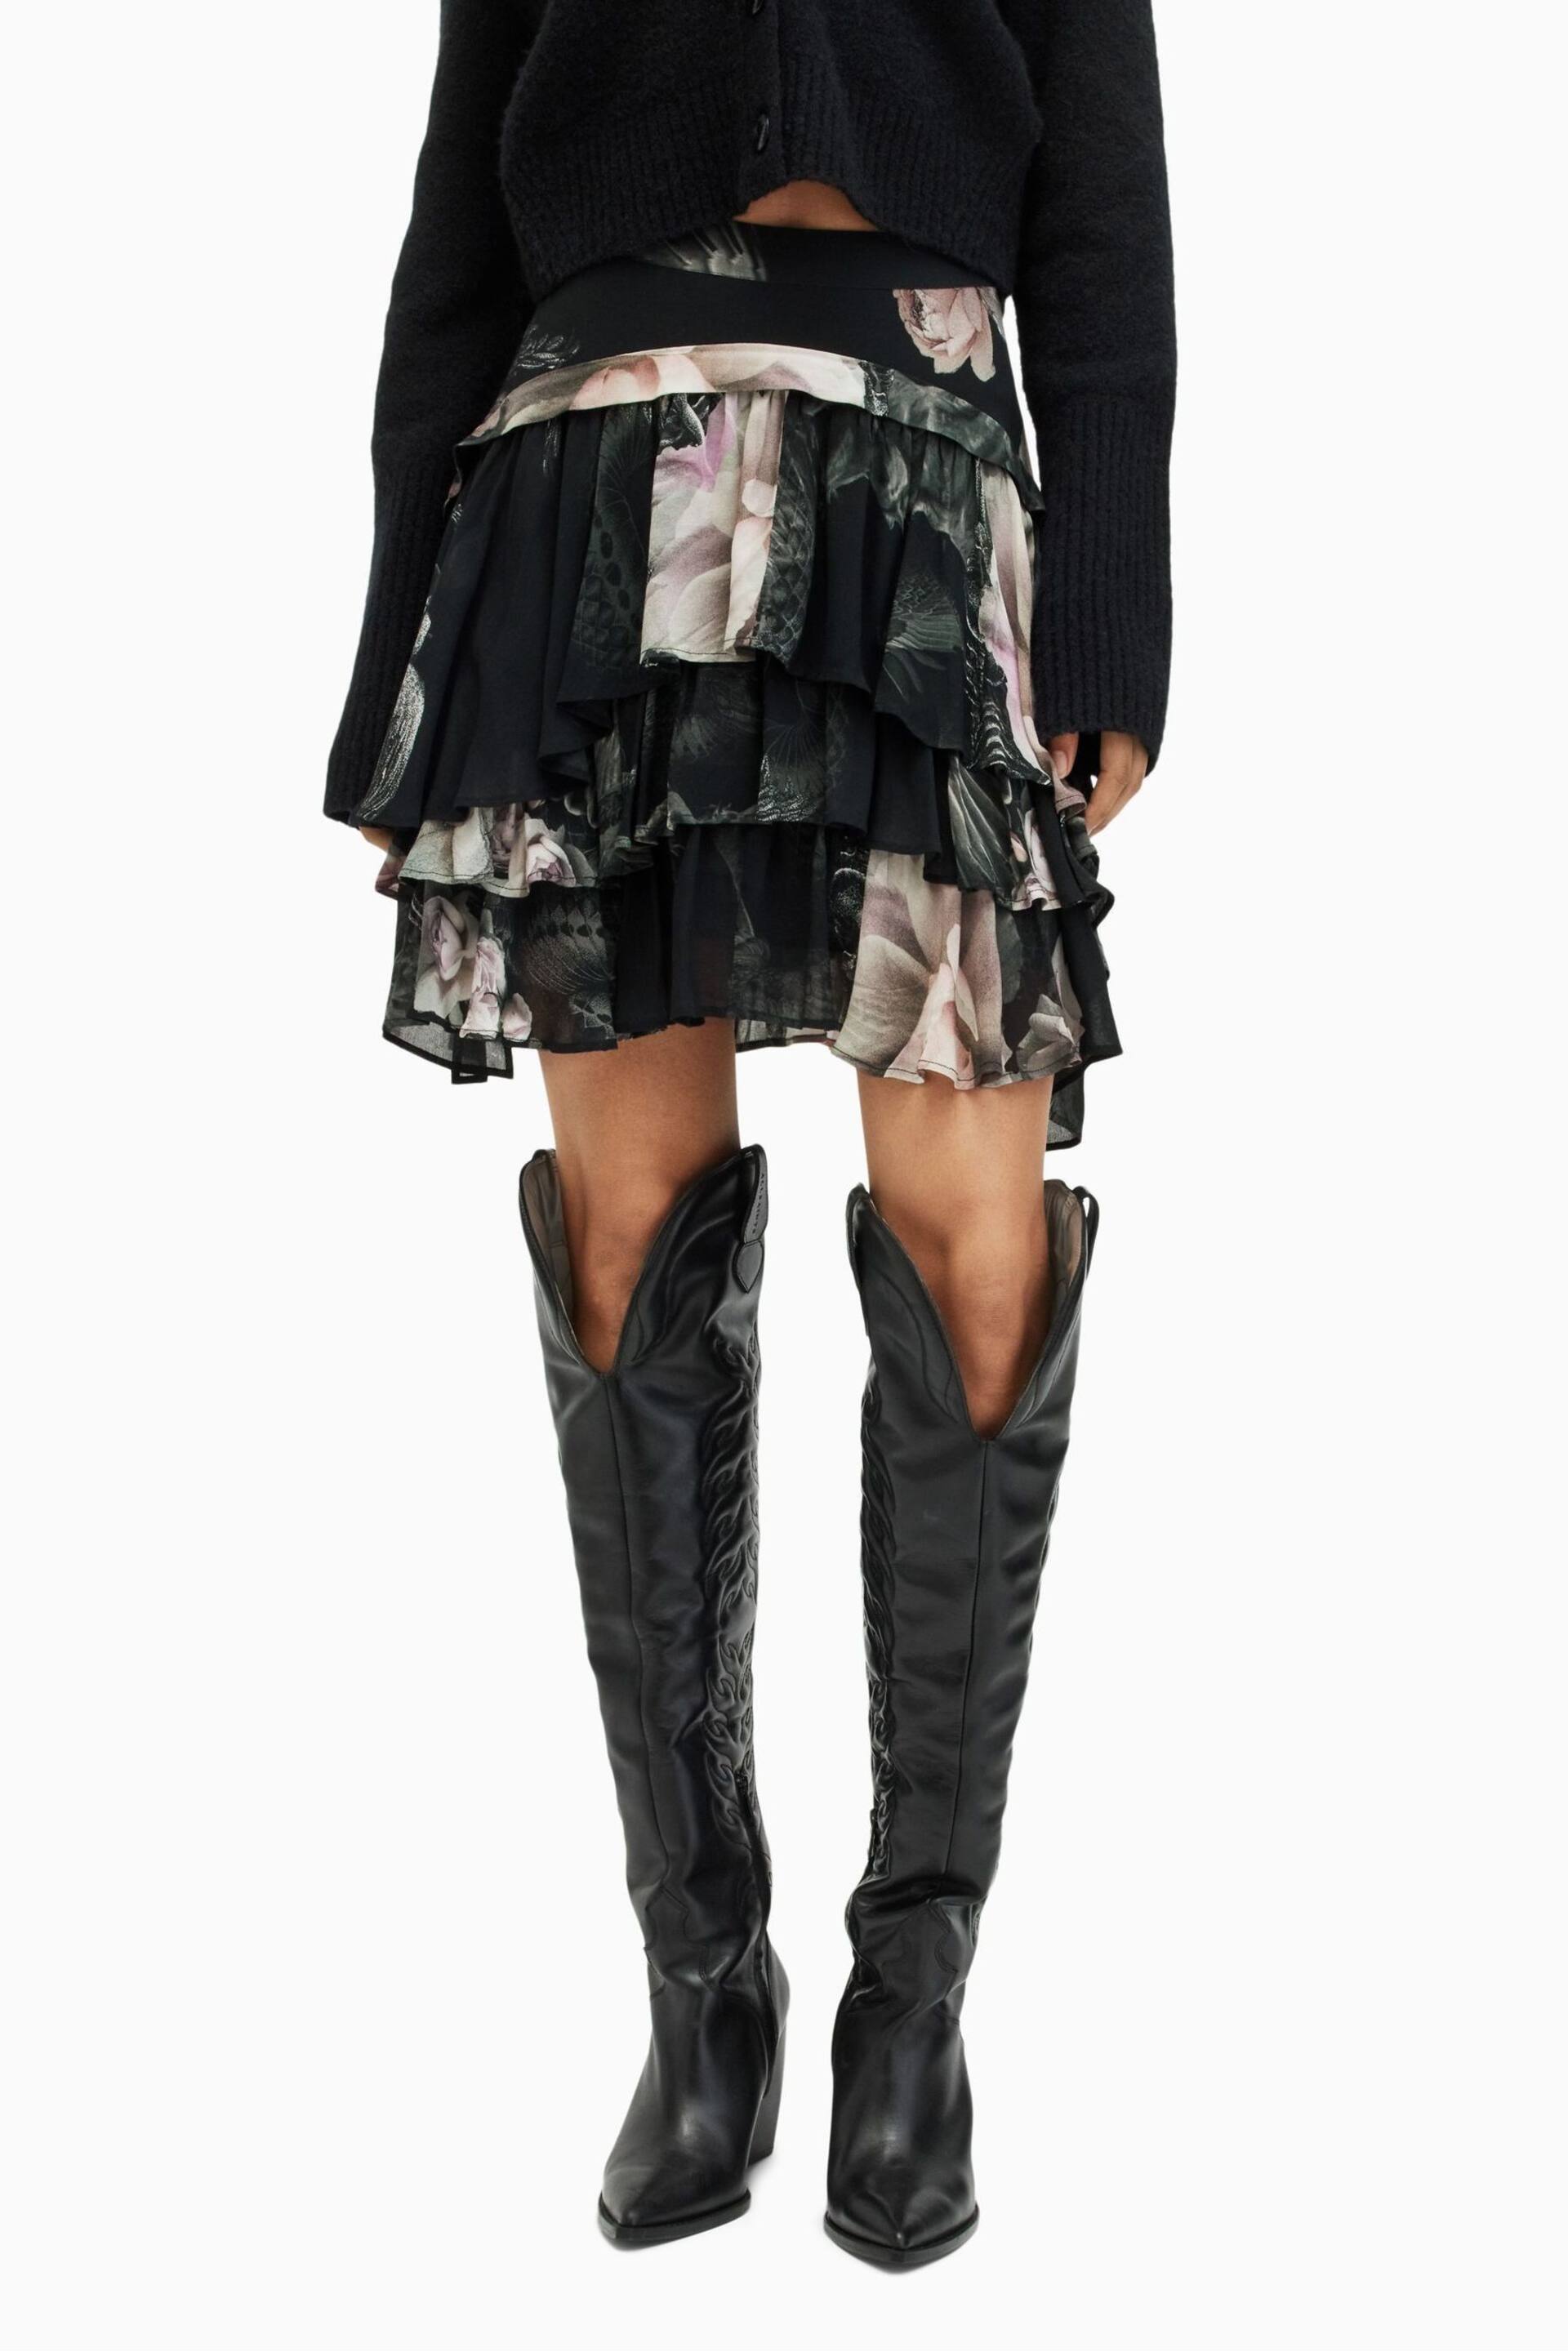 AllSaints Black Cavarly Valley Skirt - Image 3 of 6